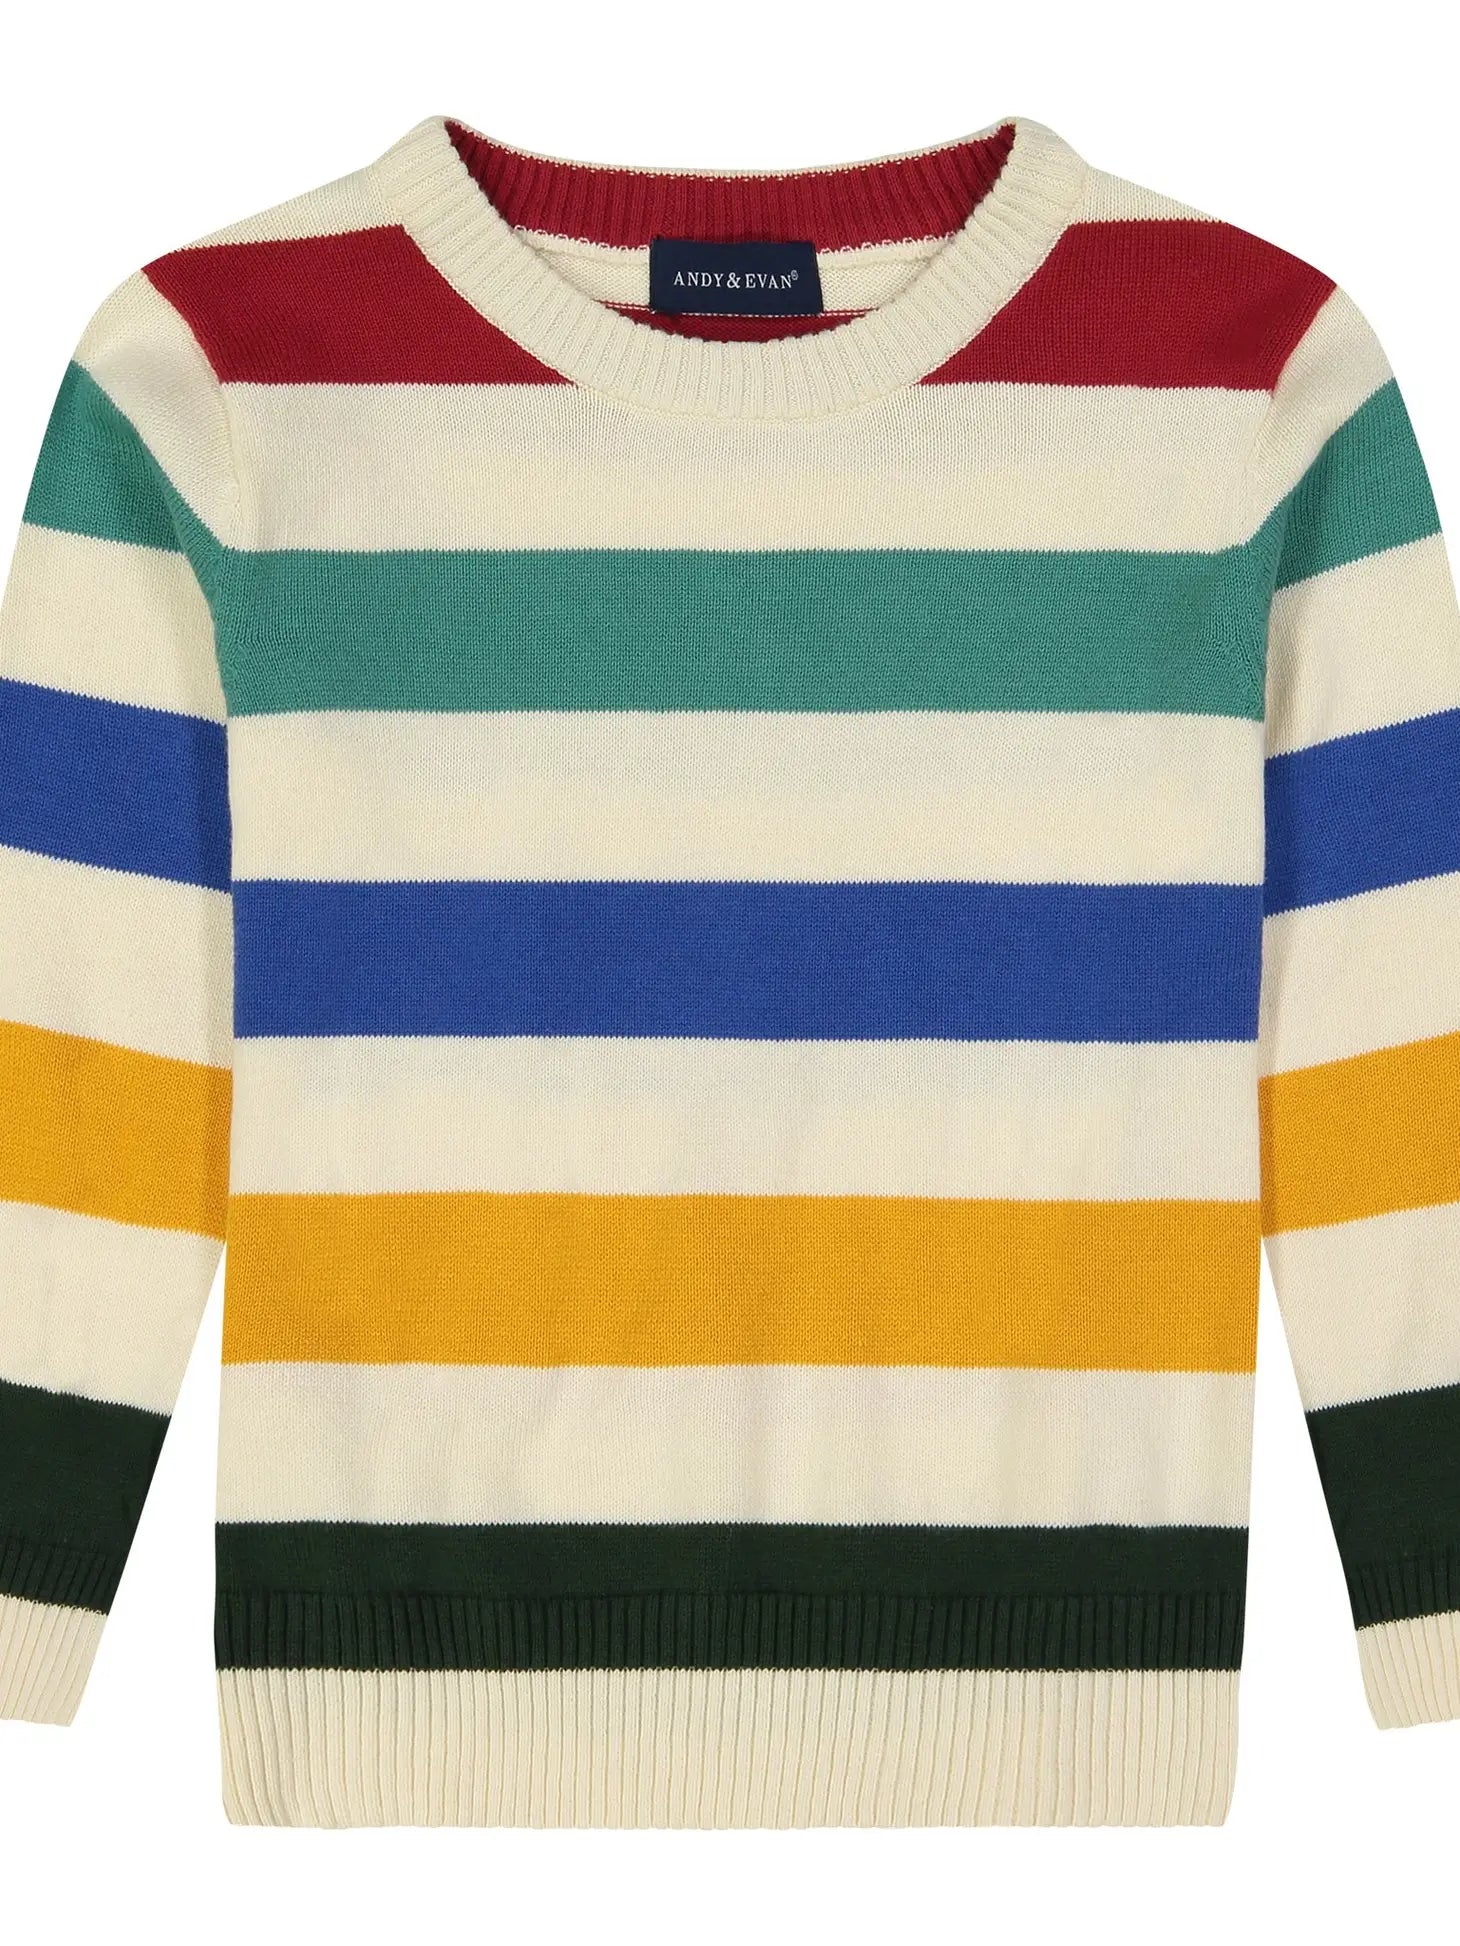 Boys 3-Piece Striped Sweater Set*